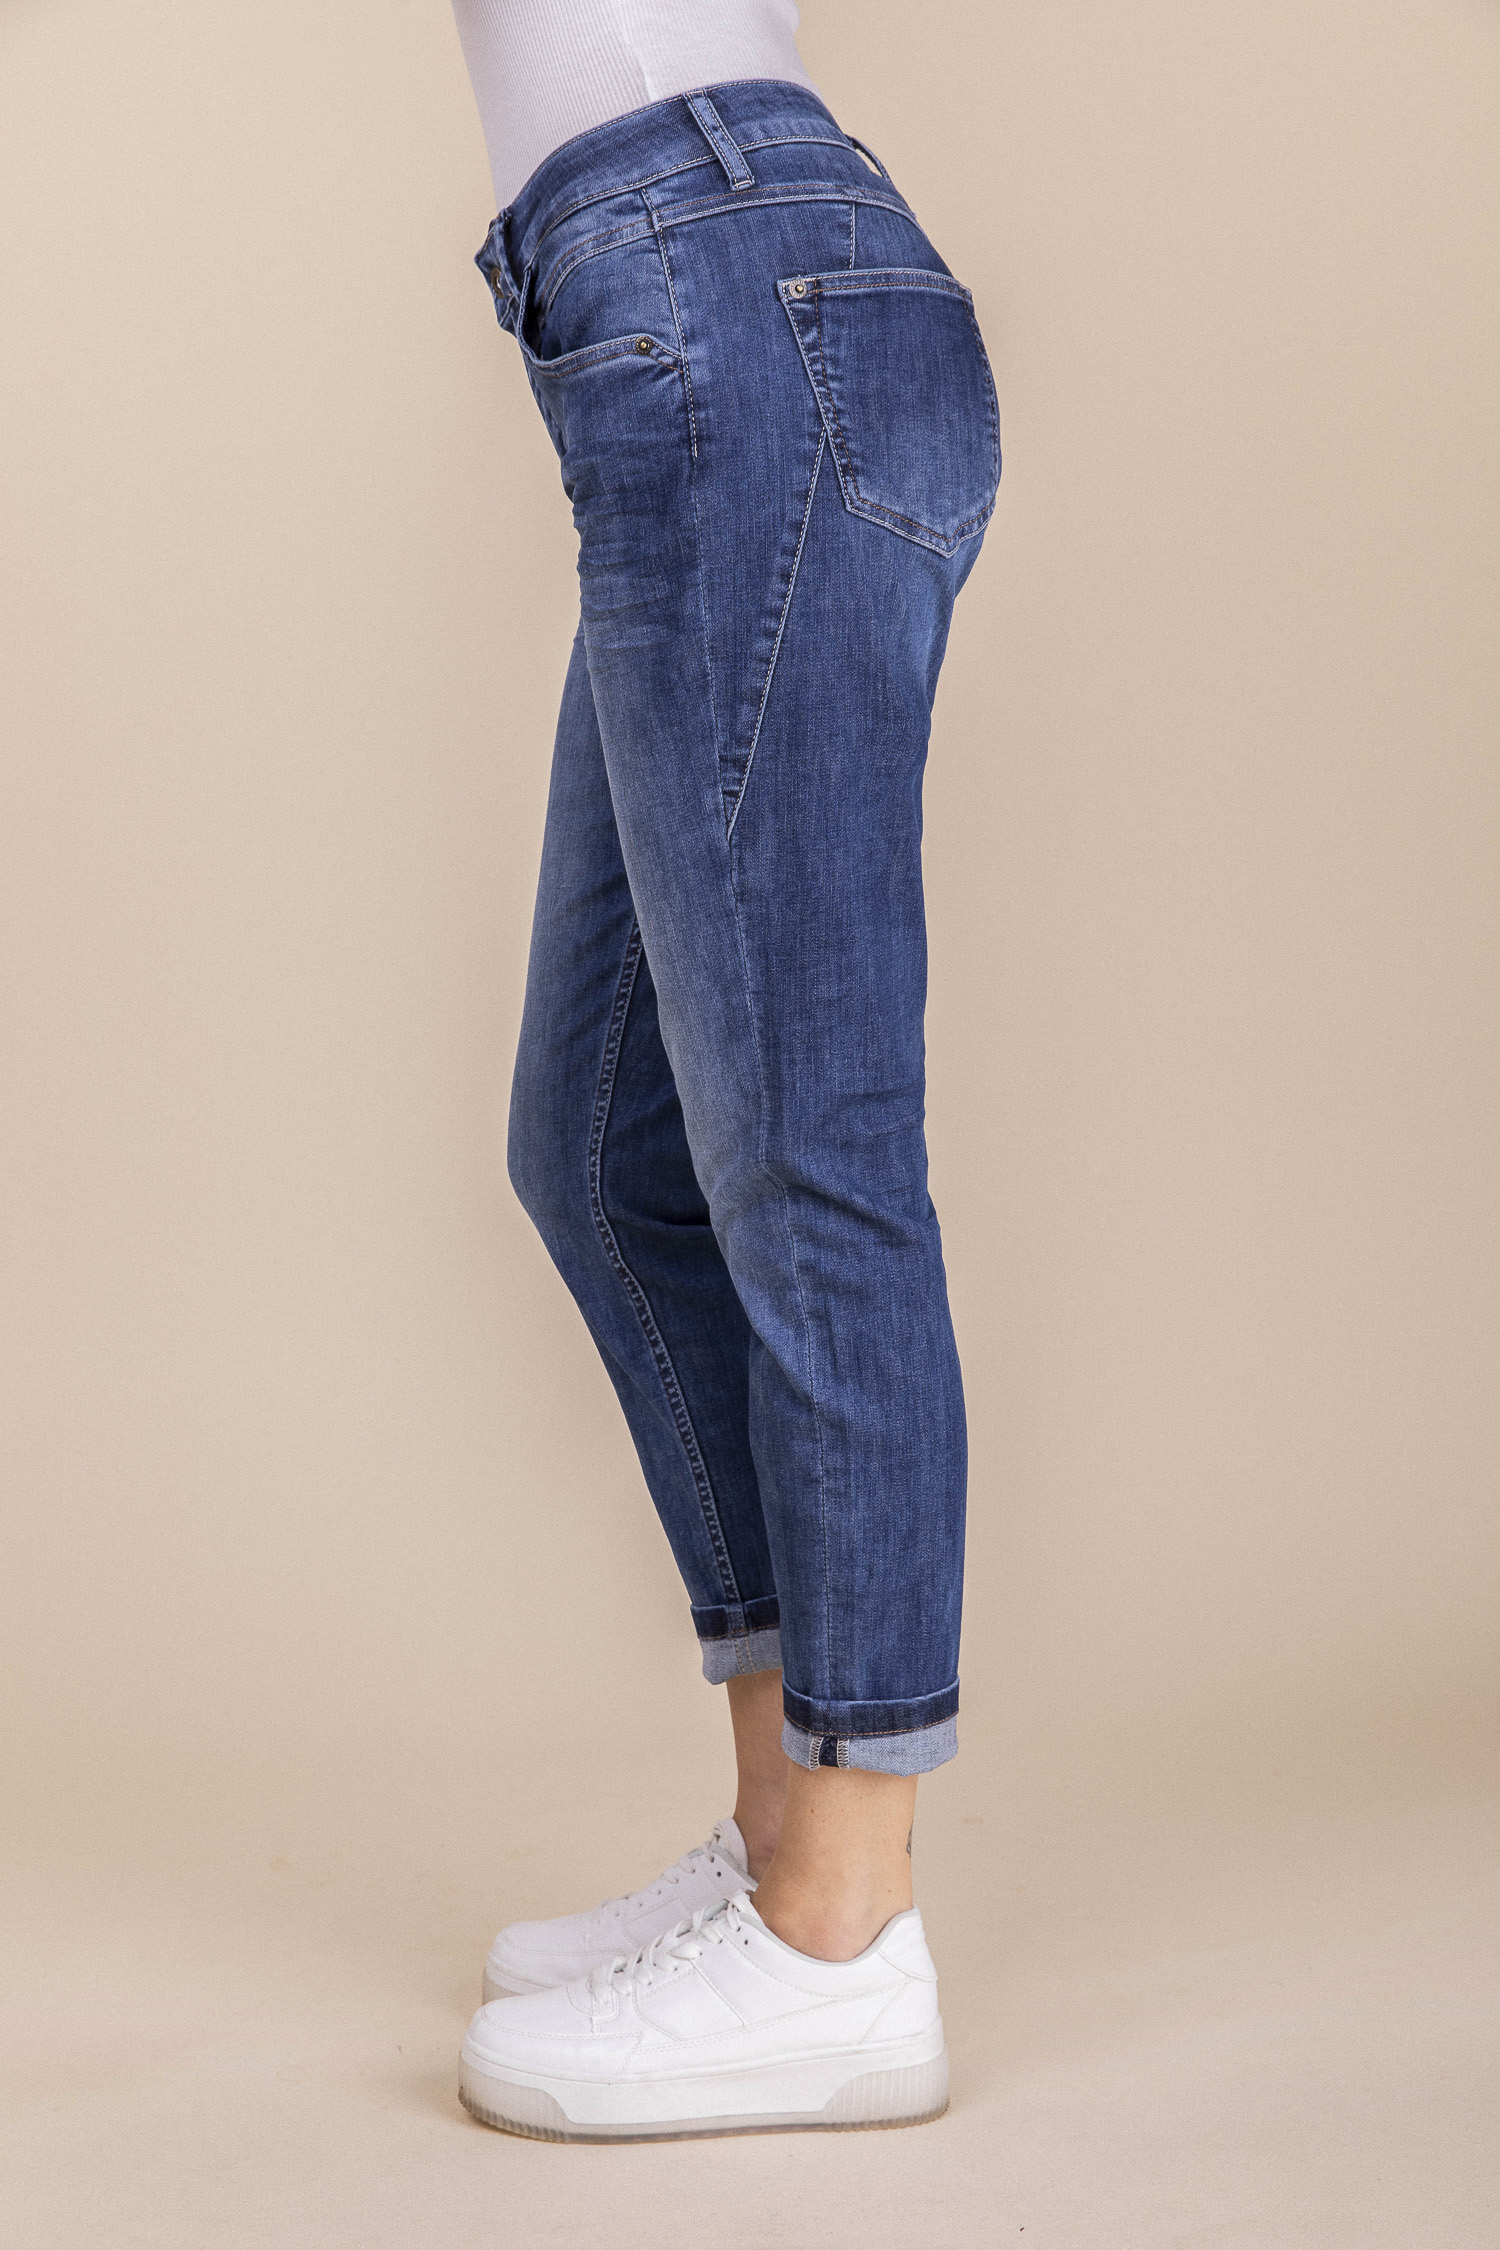 Blue Fire Jeans Gigi Slim Tapered Rinsed Washed Oder Stone Washed Mode Wendeln Shop